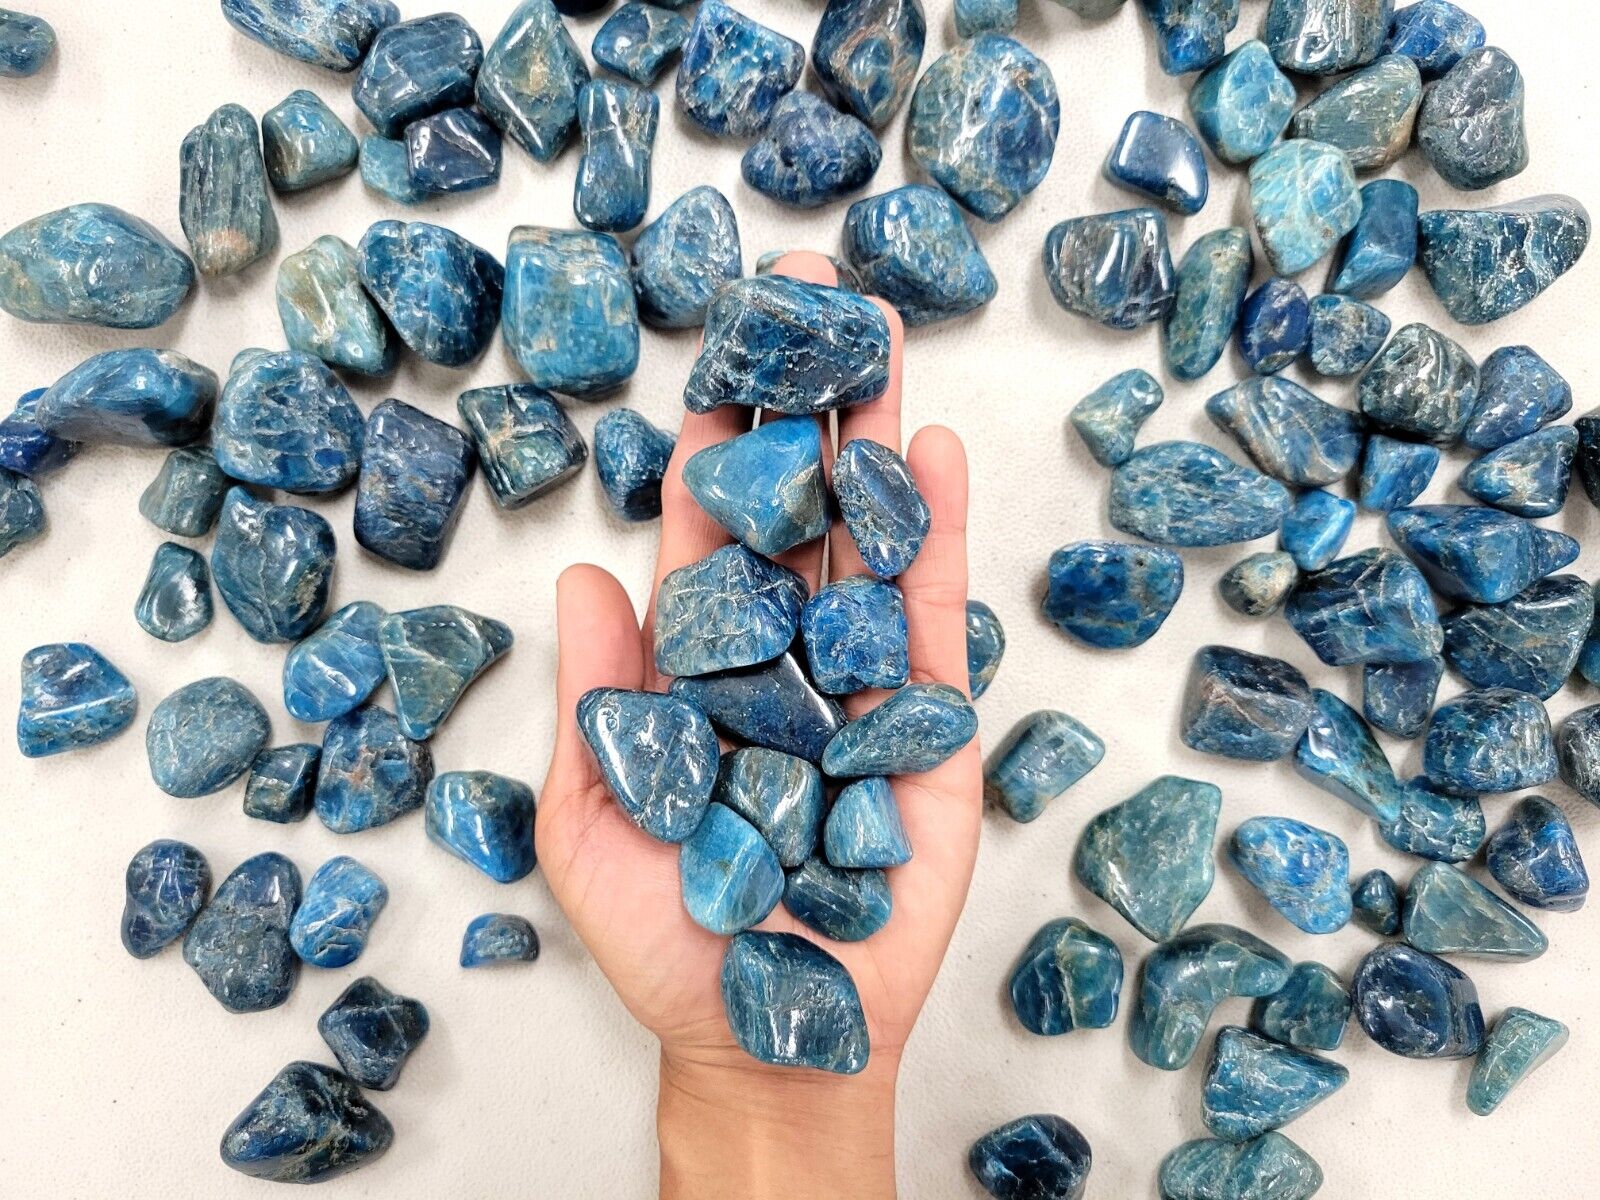 Tumbled Blue Apatite Crystal Stones Polished Healing Natural Gemstones Bulk